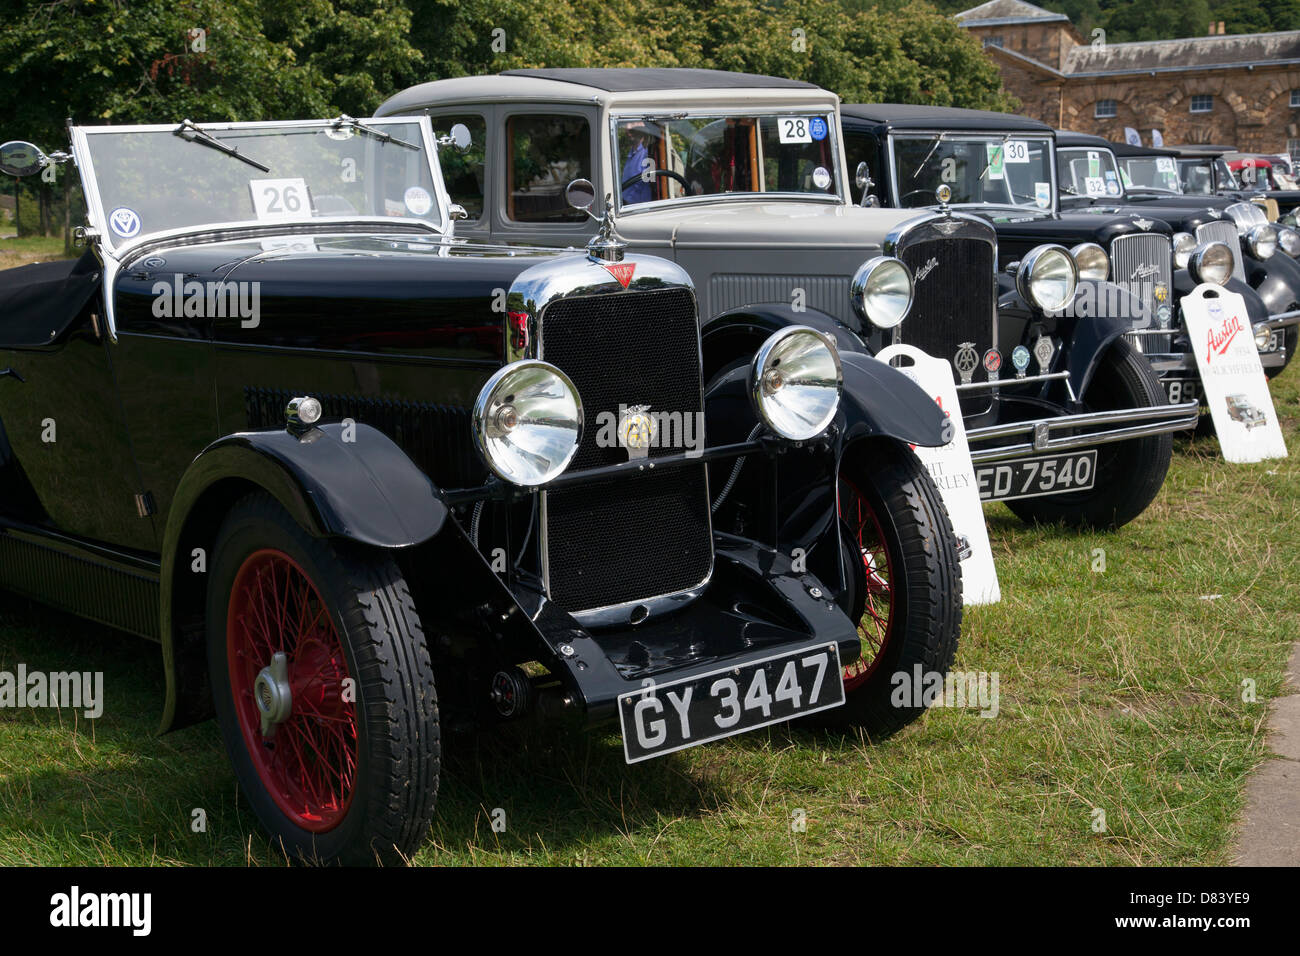 A classic & vintage car show at Chatsworth, Derbyshire, England, U.K. Stock Photo